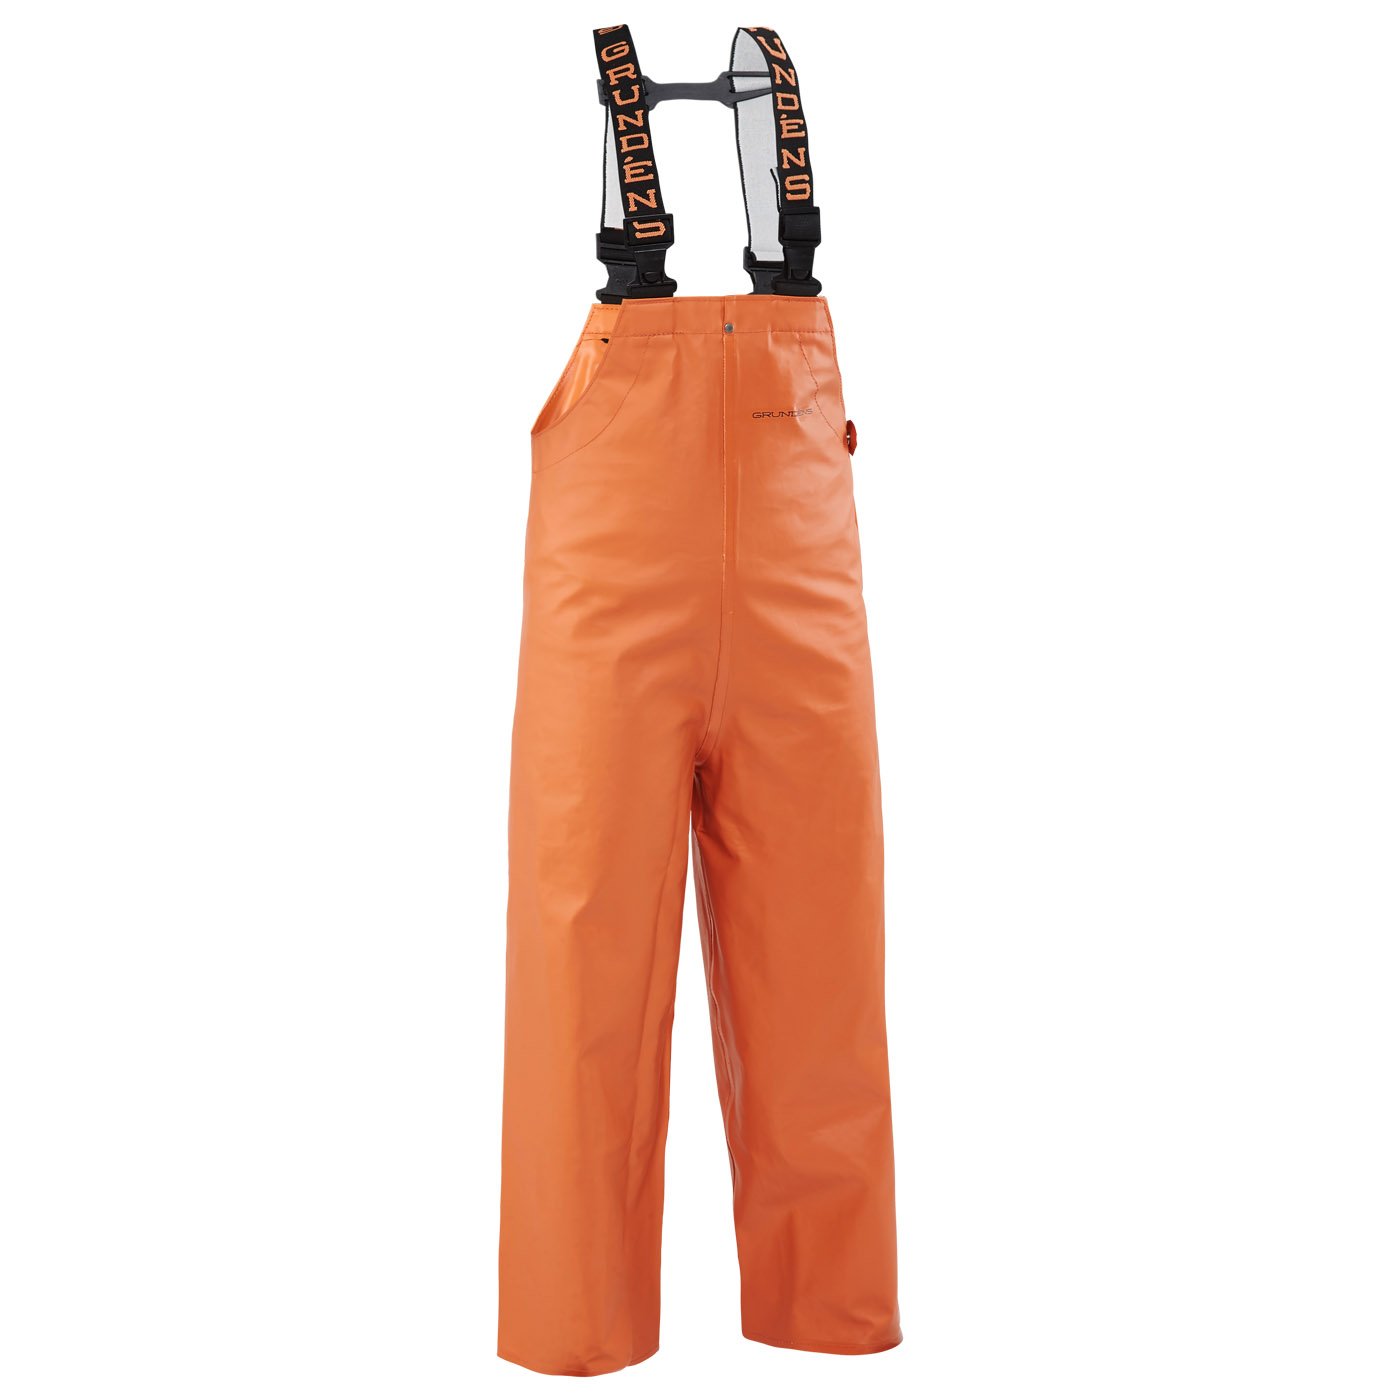 Grundéns Children's Clipper 117 Sport Fishing Bib Pant Orange